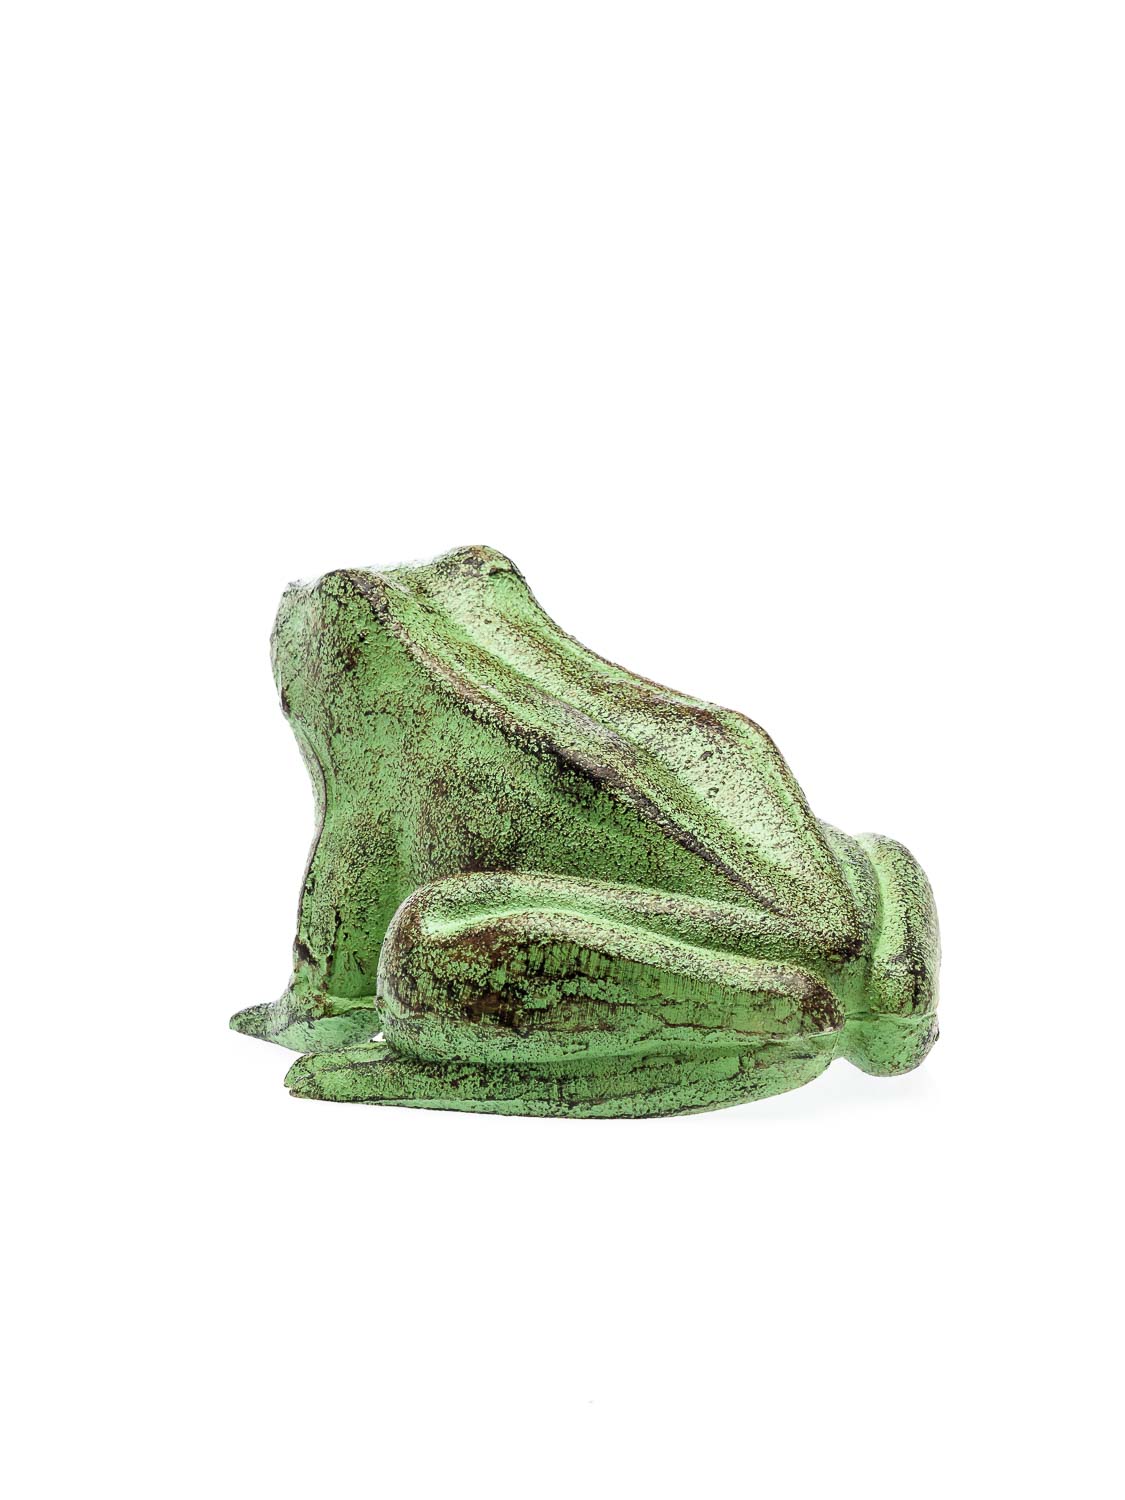 Figur Frosch 14cm Skulptur 1kg Gusseisen Gartenfigur antik Stil grün 